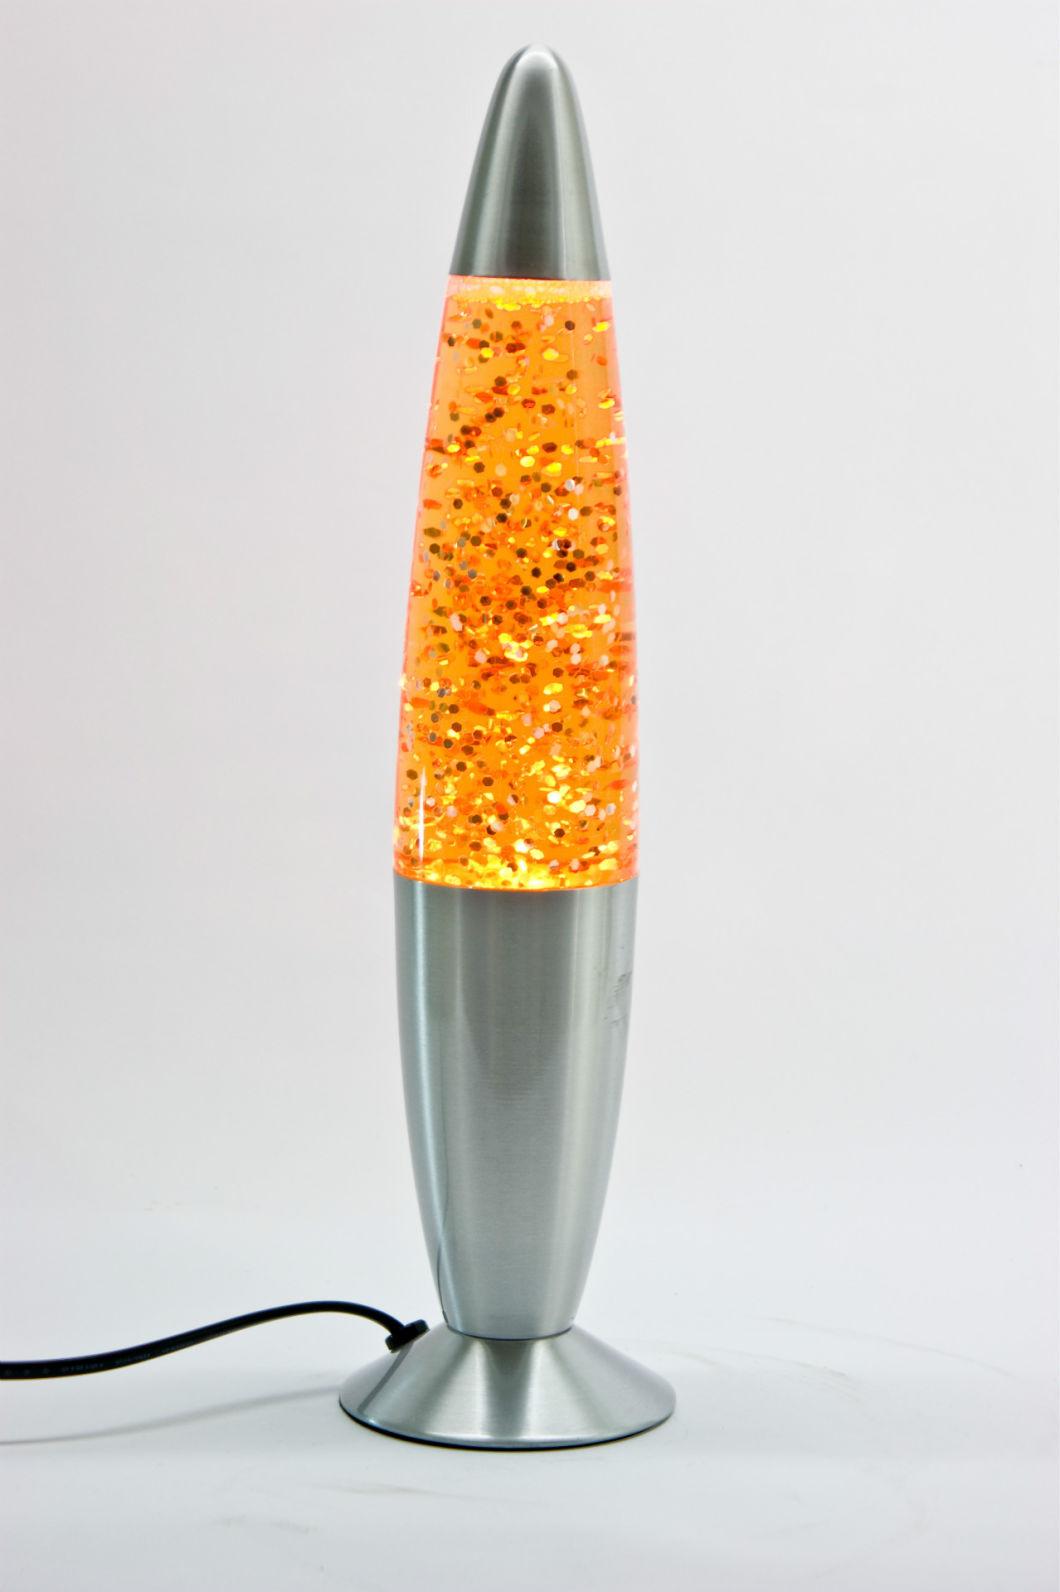 Liquid Lava Lamp Conical Bottle Wax Lamp Jellyfish Lamp Creative Home Decorative Night Light Bedroom Bedside Lamp Esg17685